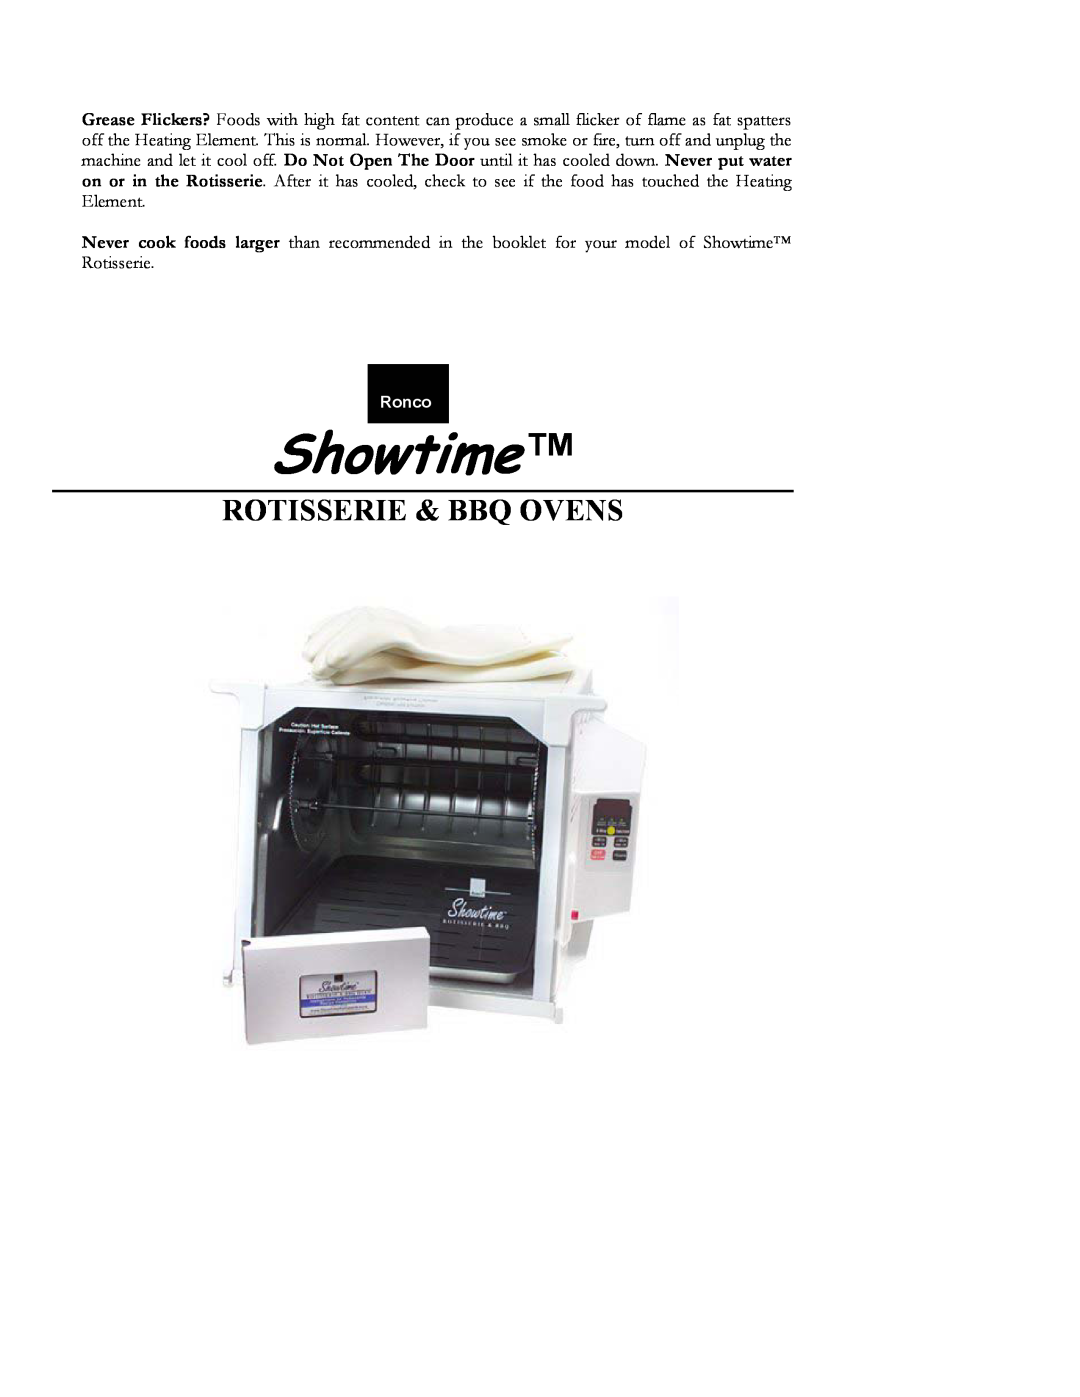 Ronco manual Showtime, Rotisserie & Bbq Ovens, Ronco 